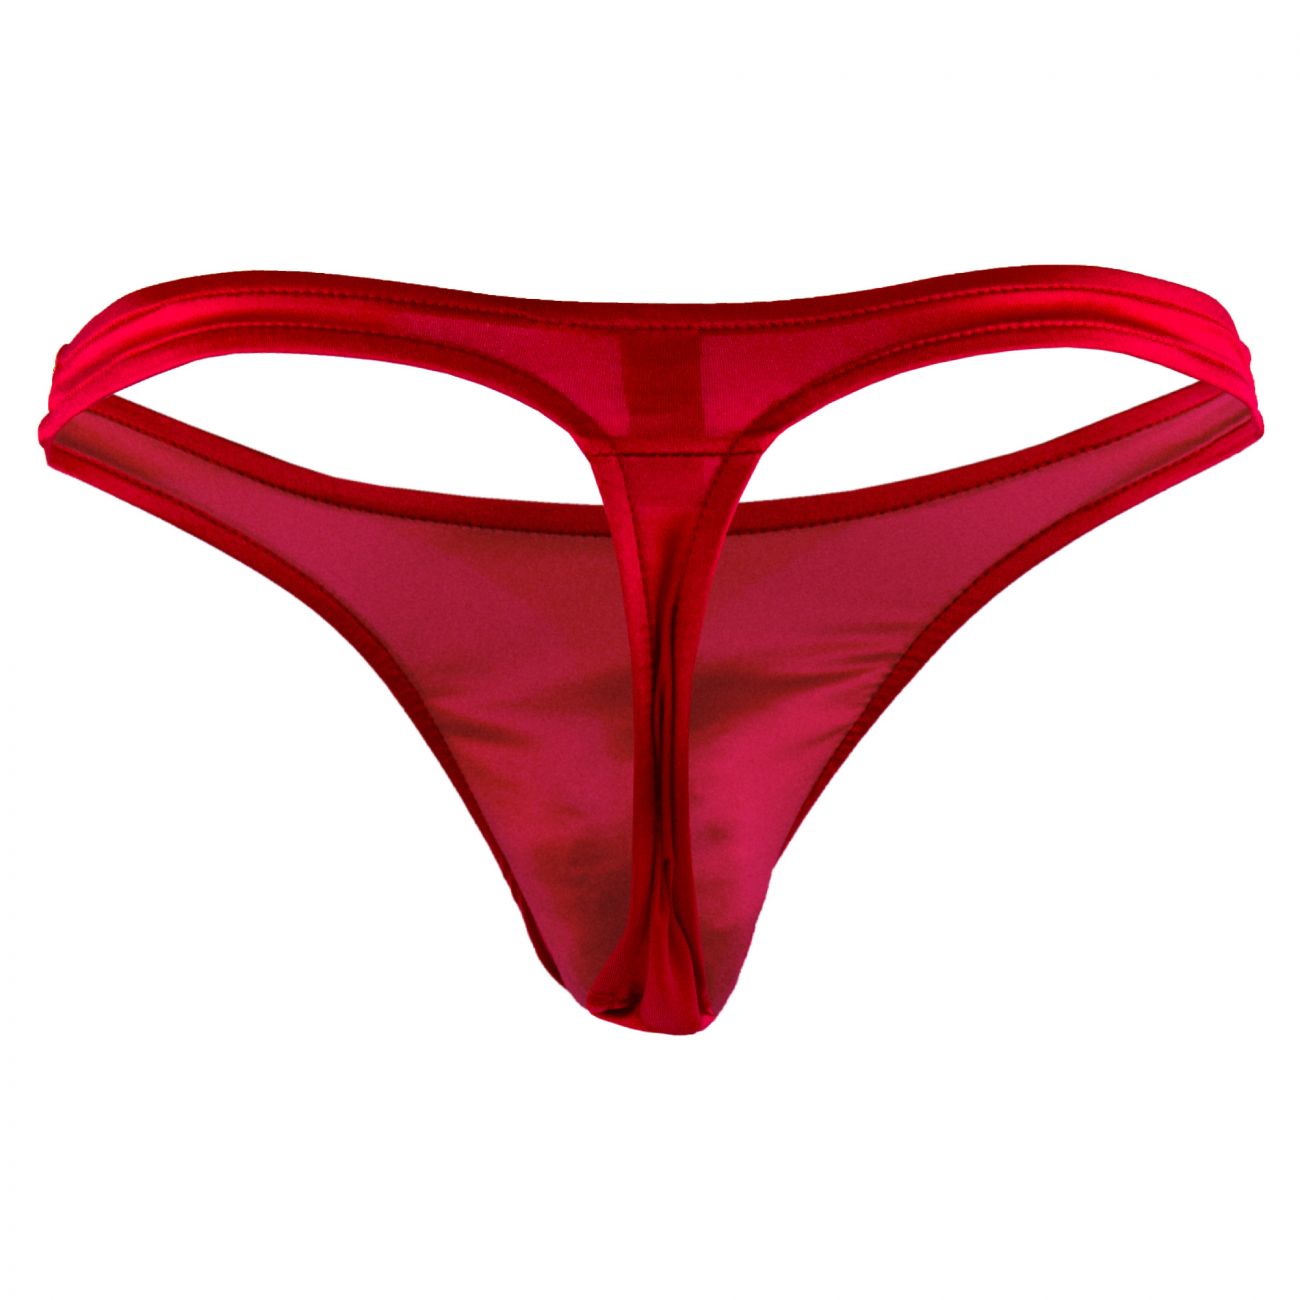 Mens Underwear: Male Power 442076 Satin Lycra Bong Thong | eBay